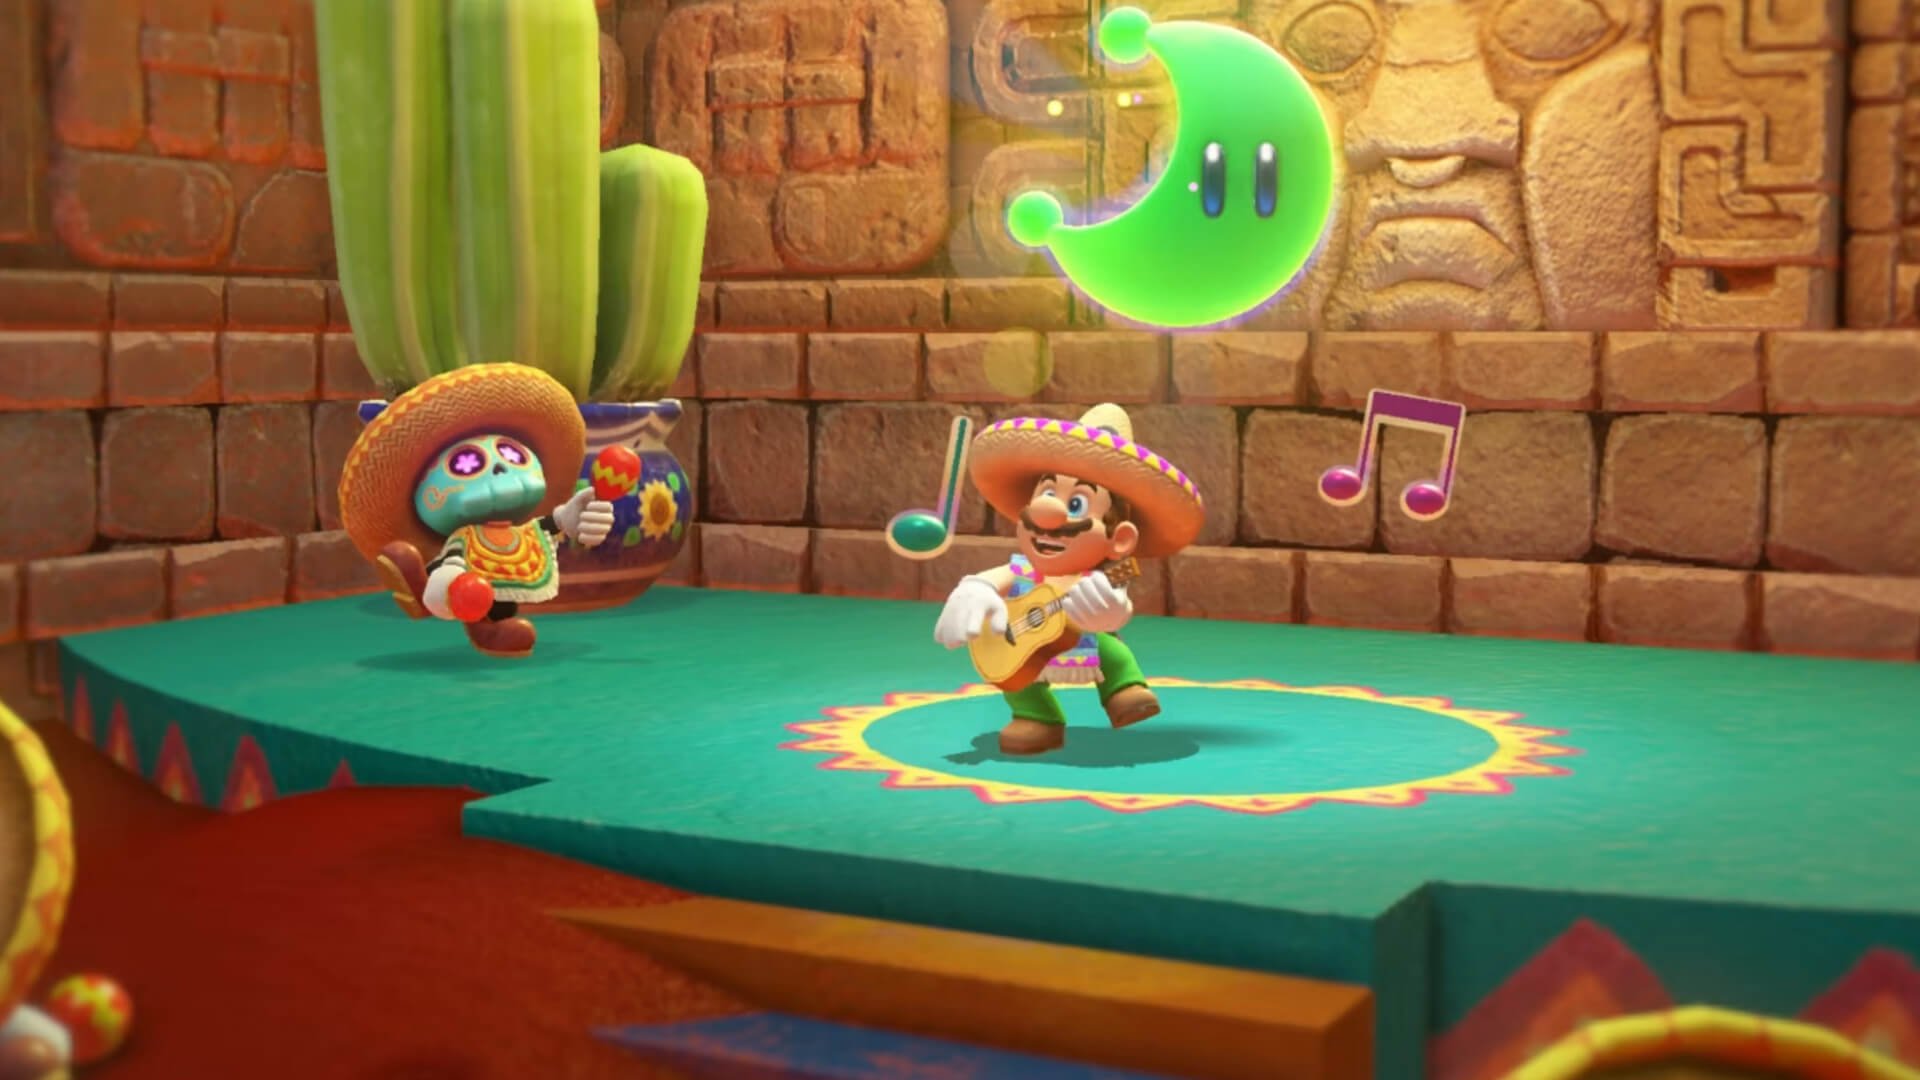 Mario dancing with a guitar in the Nintendo game Super Mario Odyssey